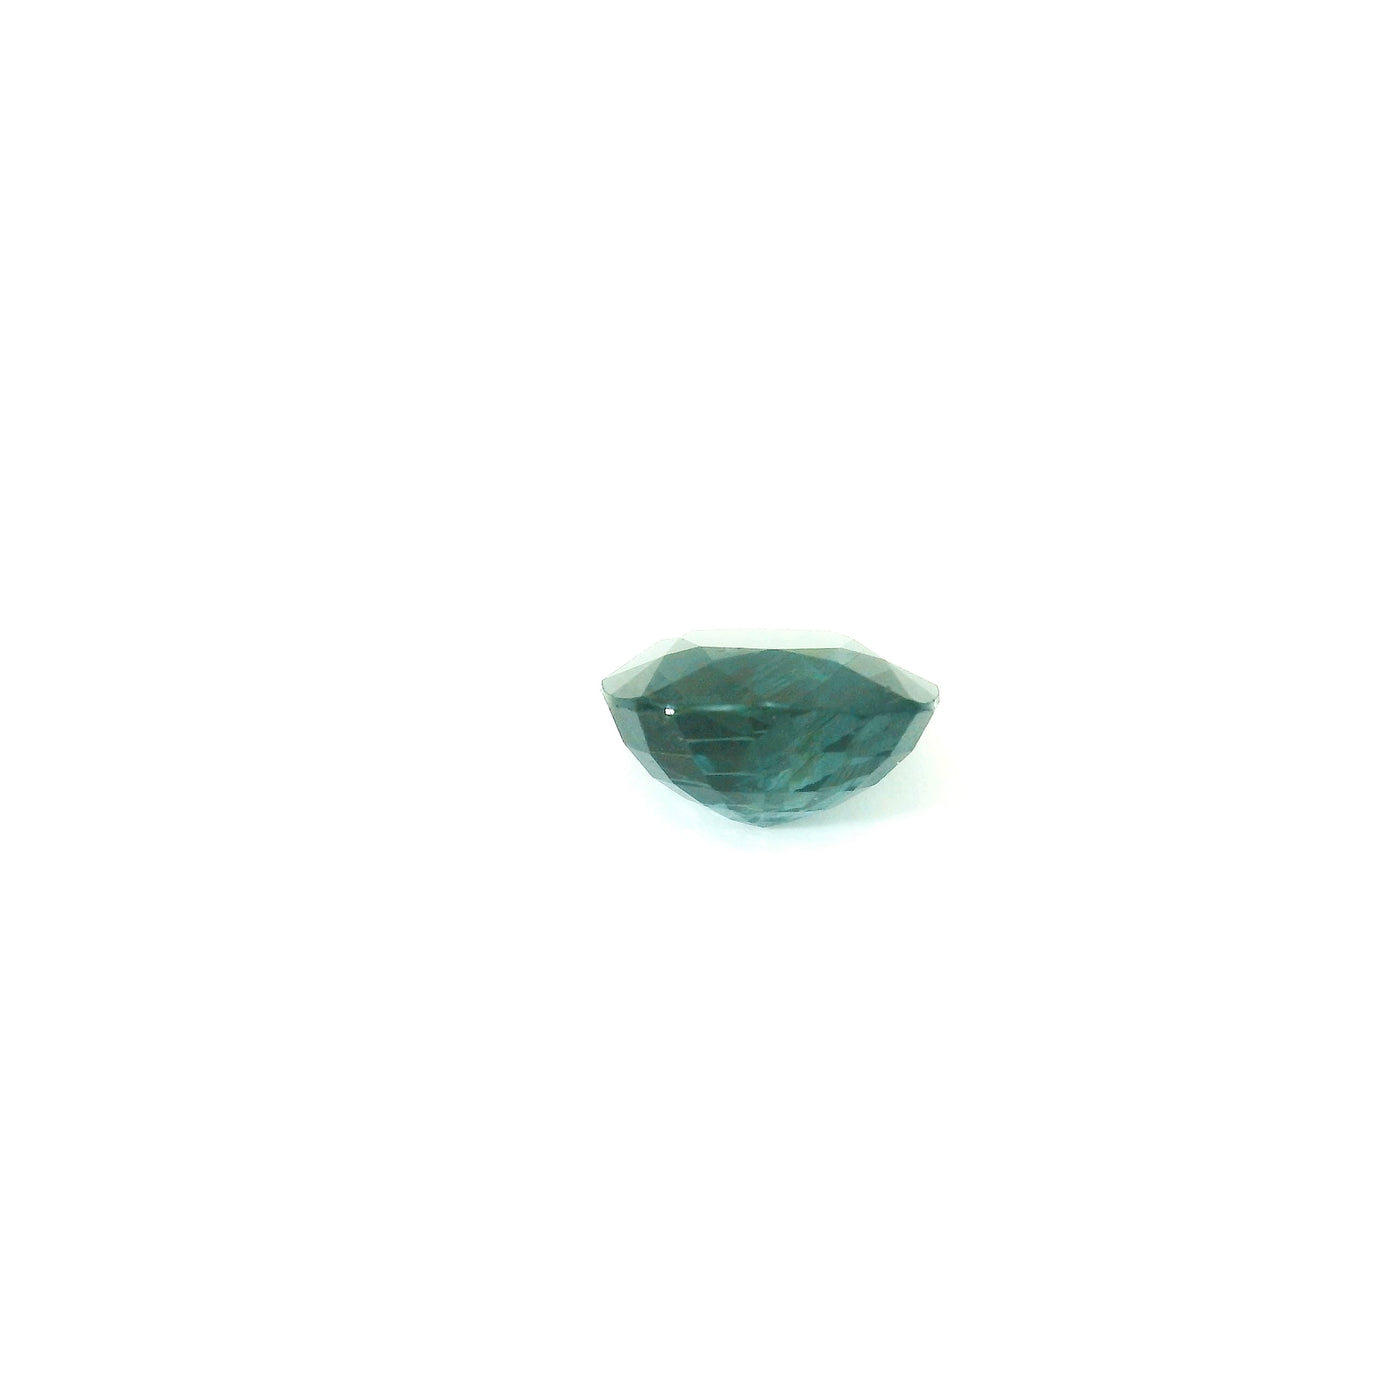 Spinelle bleu 1.67 carats coussin